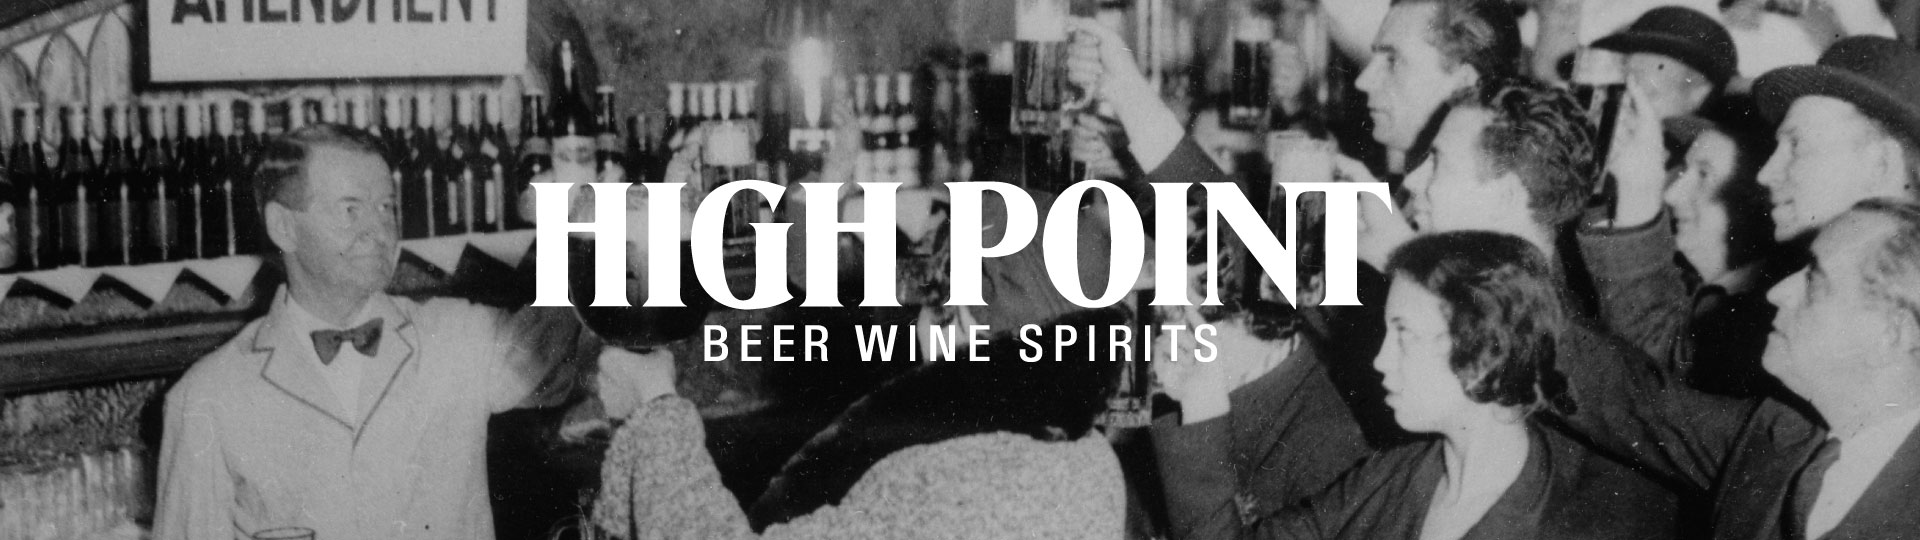 High Point Beer Wine Spirits